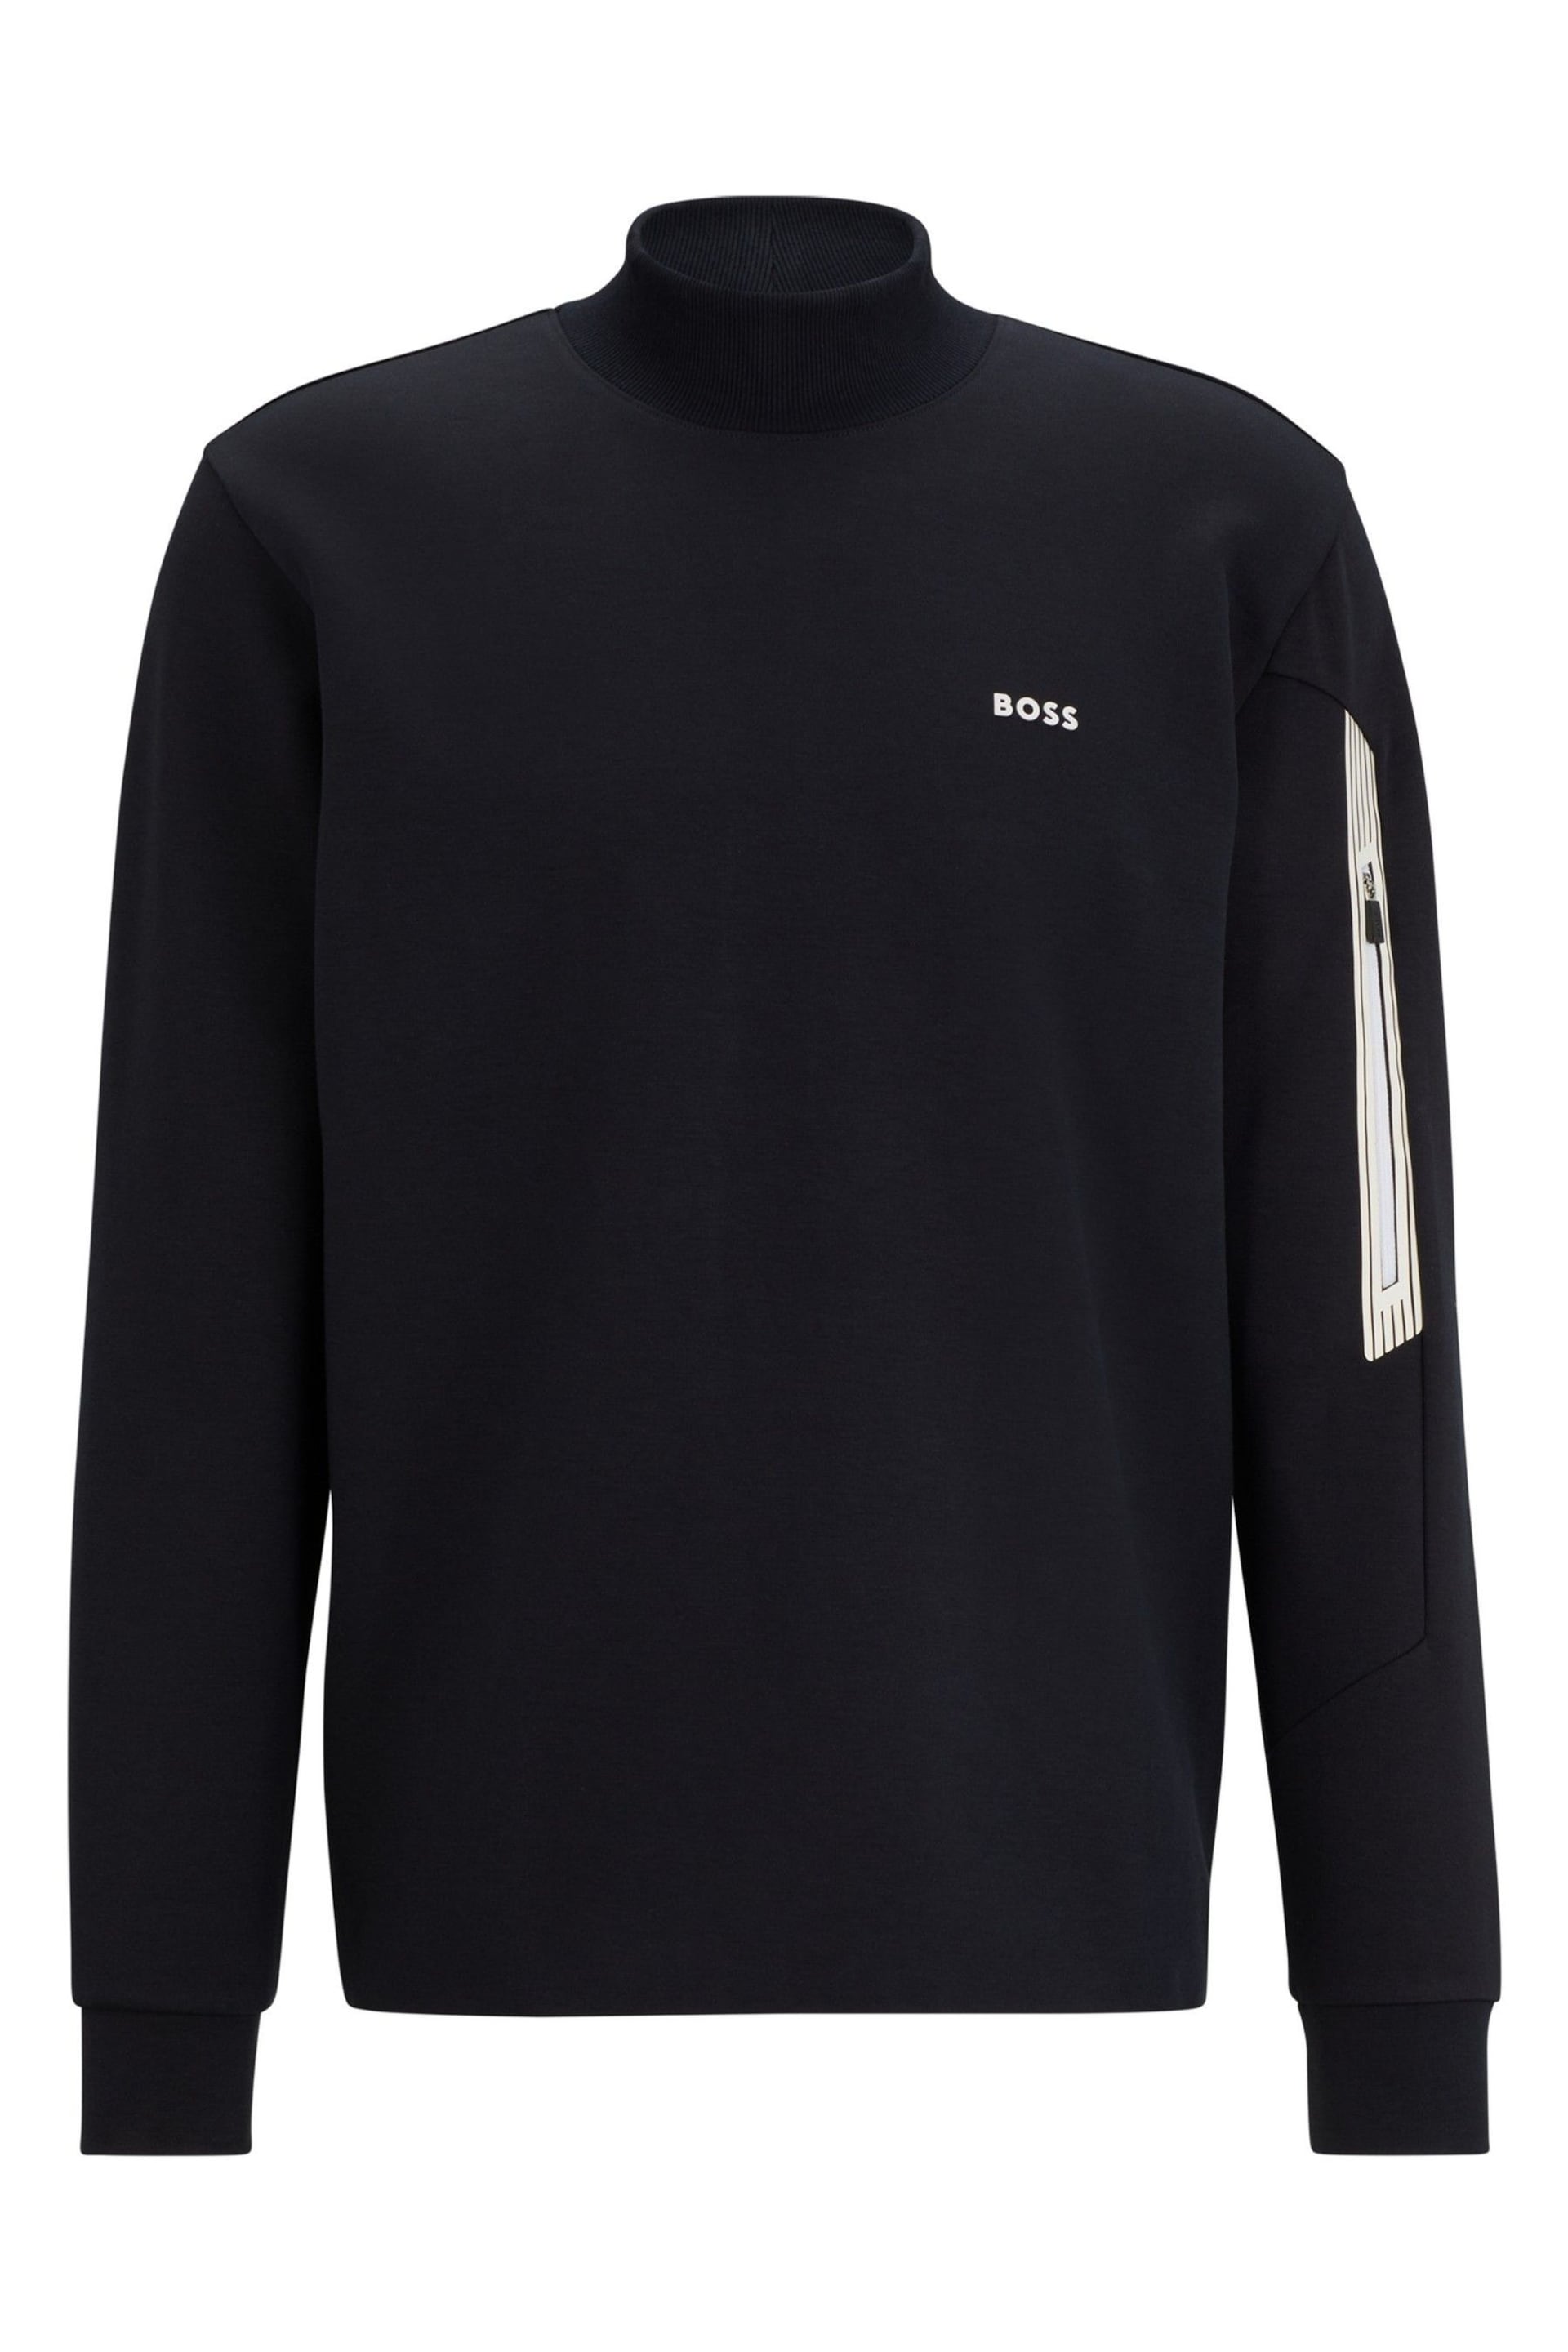 BOSS Navy Blue Cotton-Blend Sweatshirt With HD Logo Print - Image 5 of 5